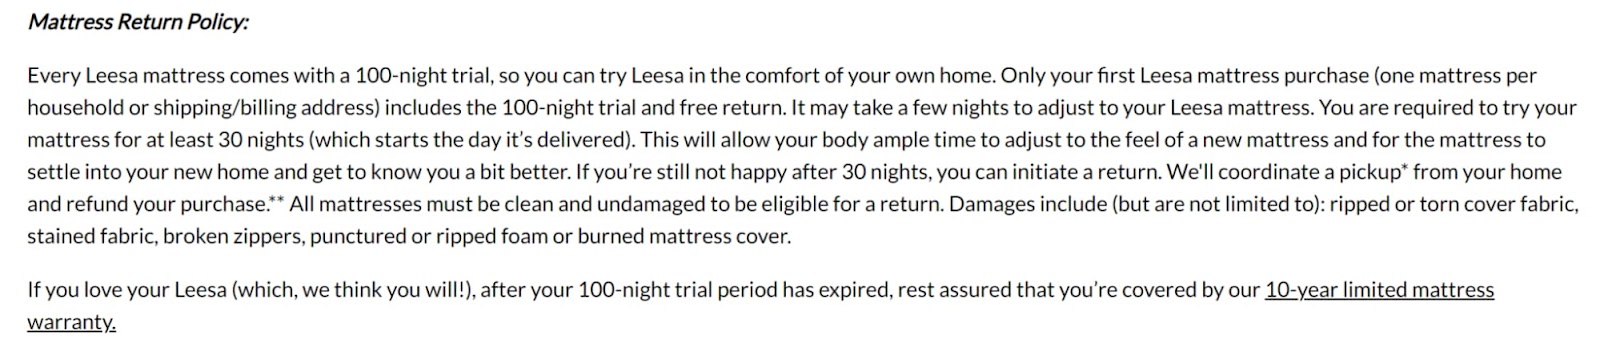 leesa mattress return policy page text